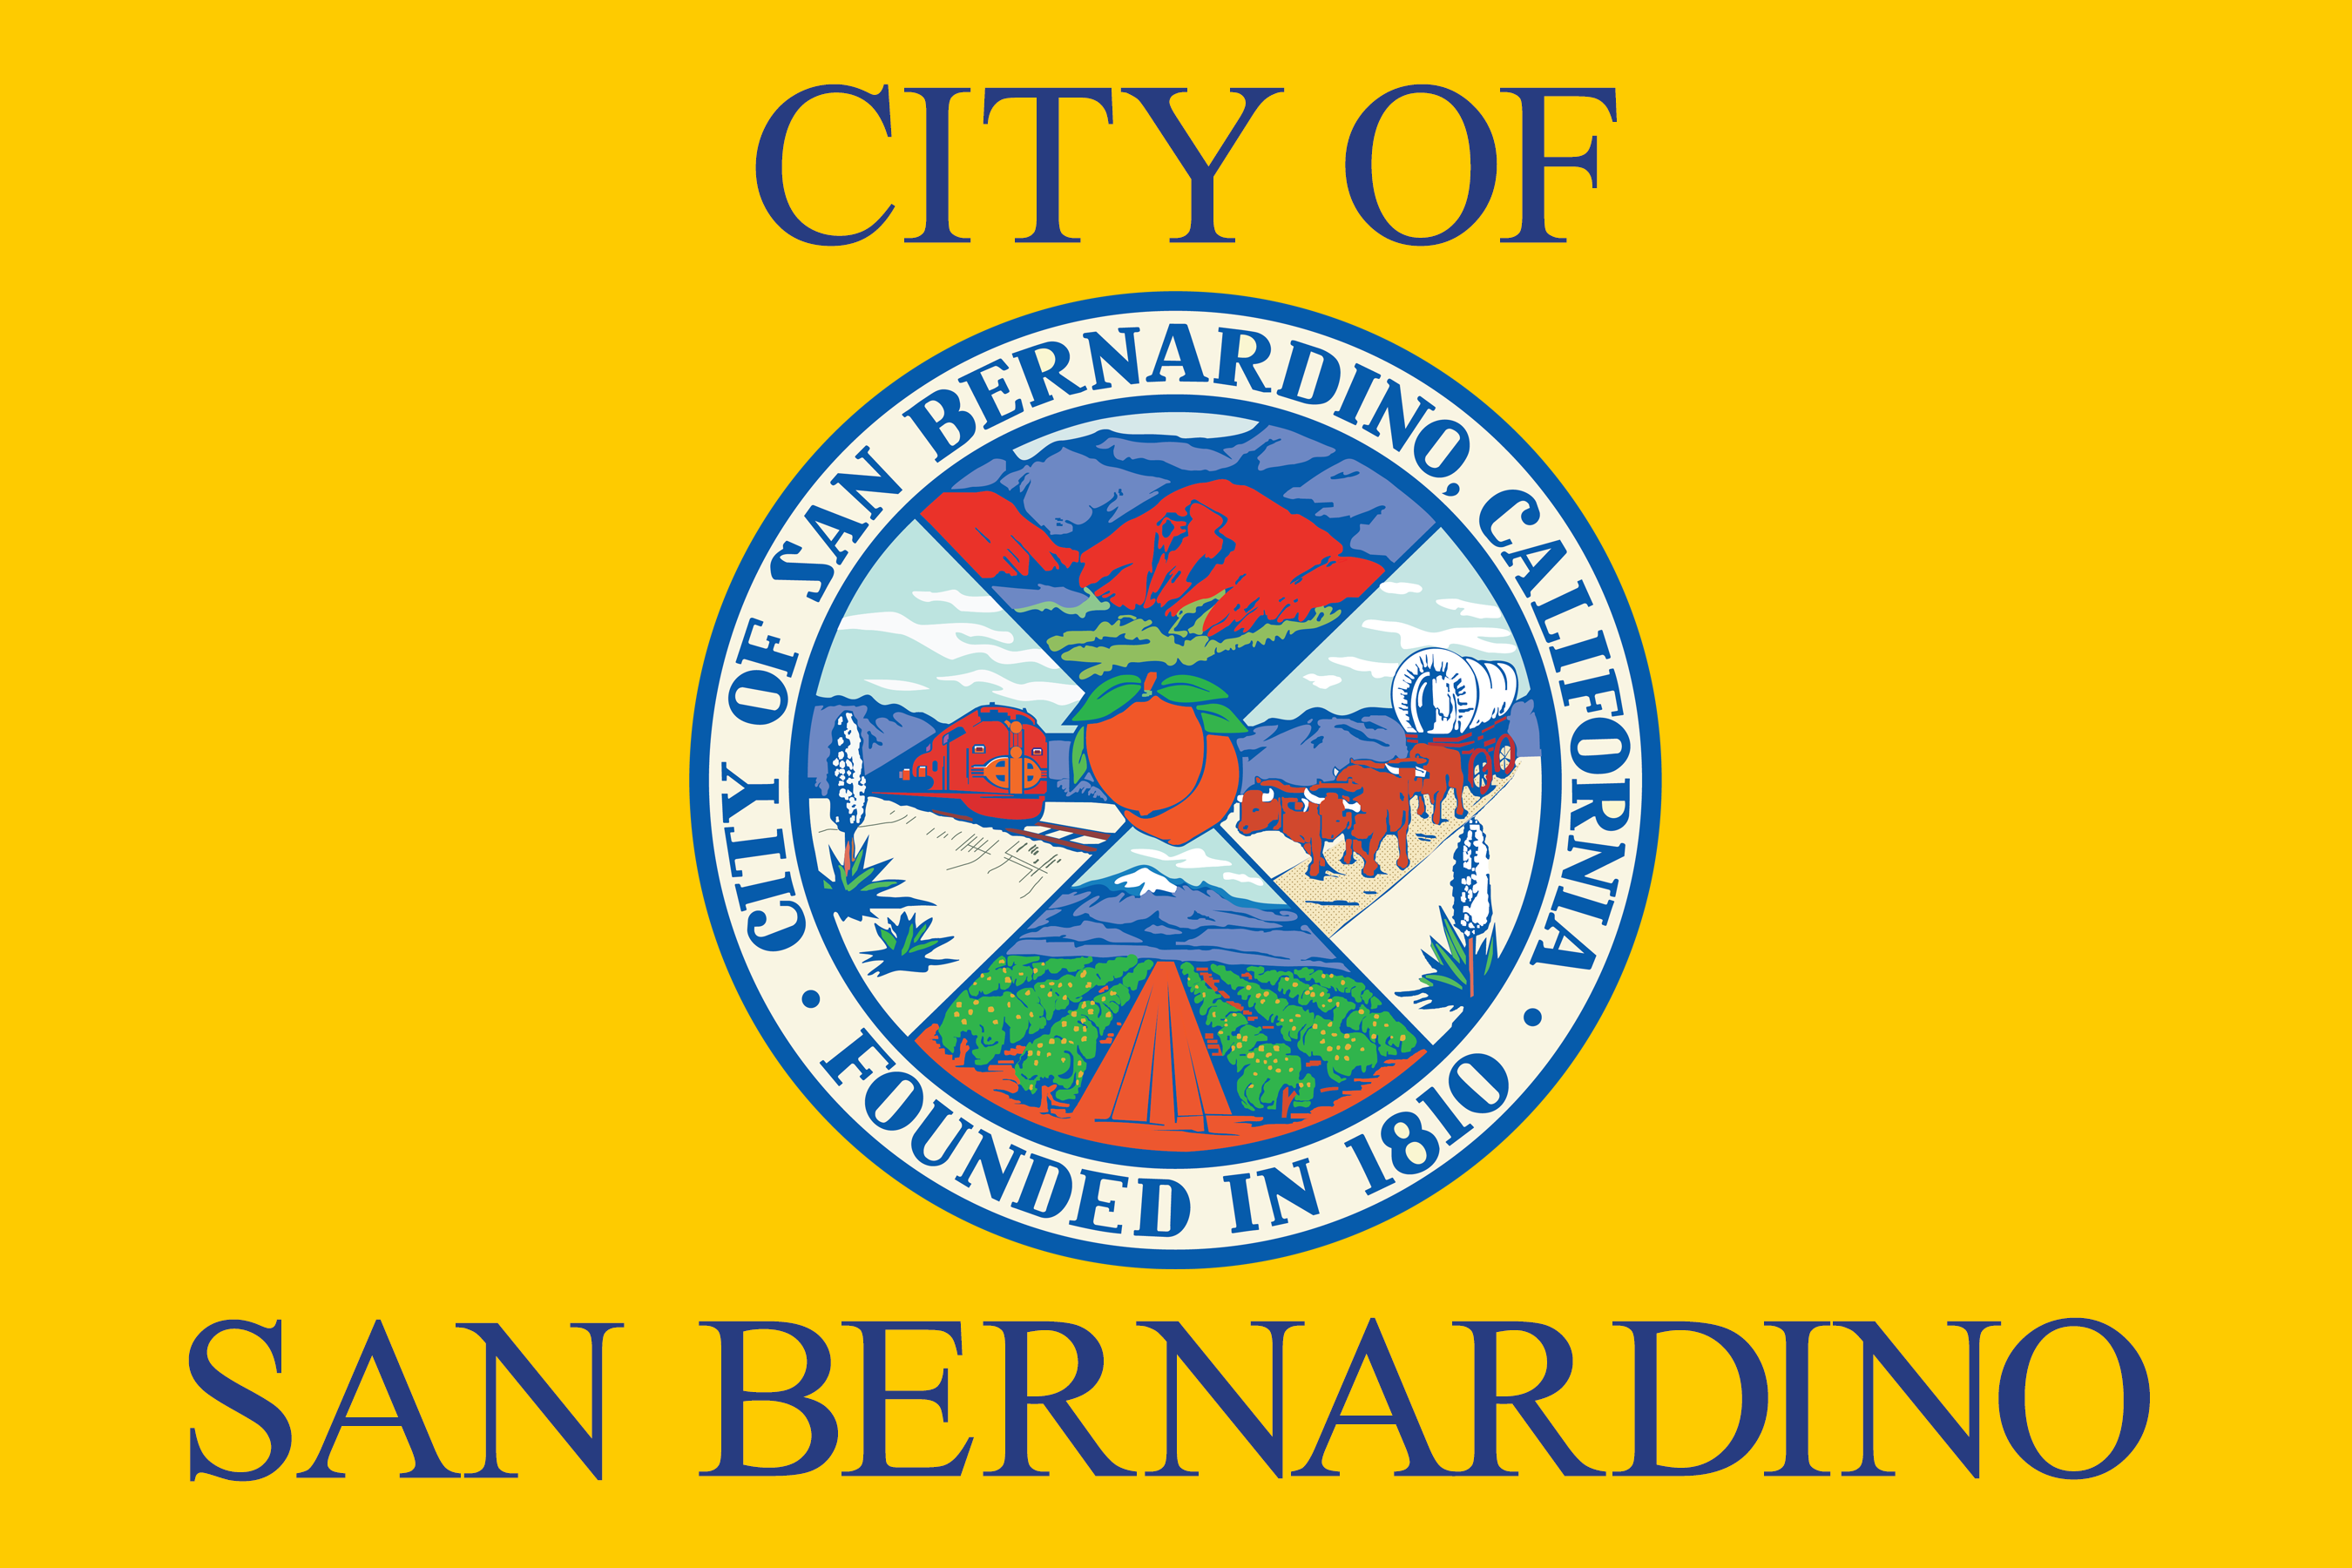 San Bernardino flag image preview